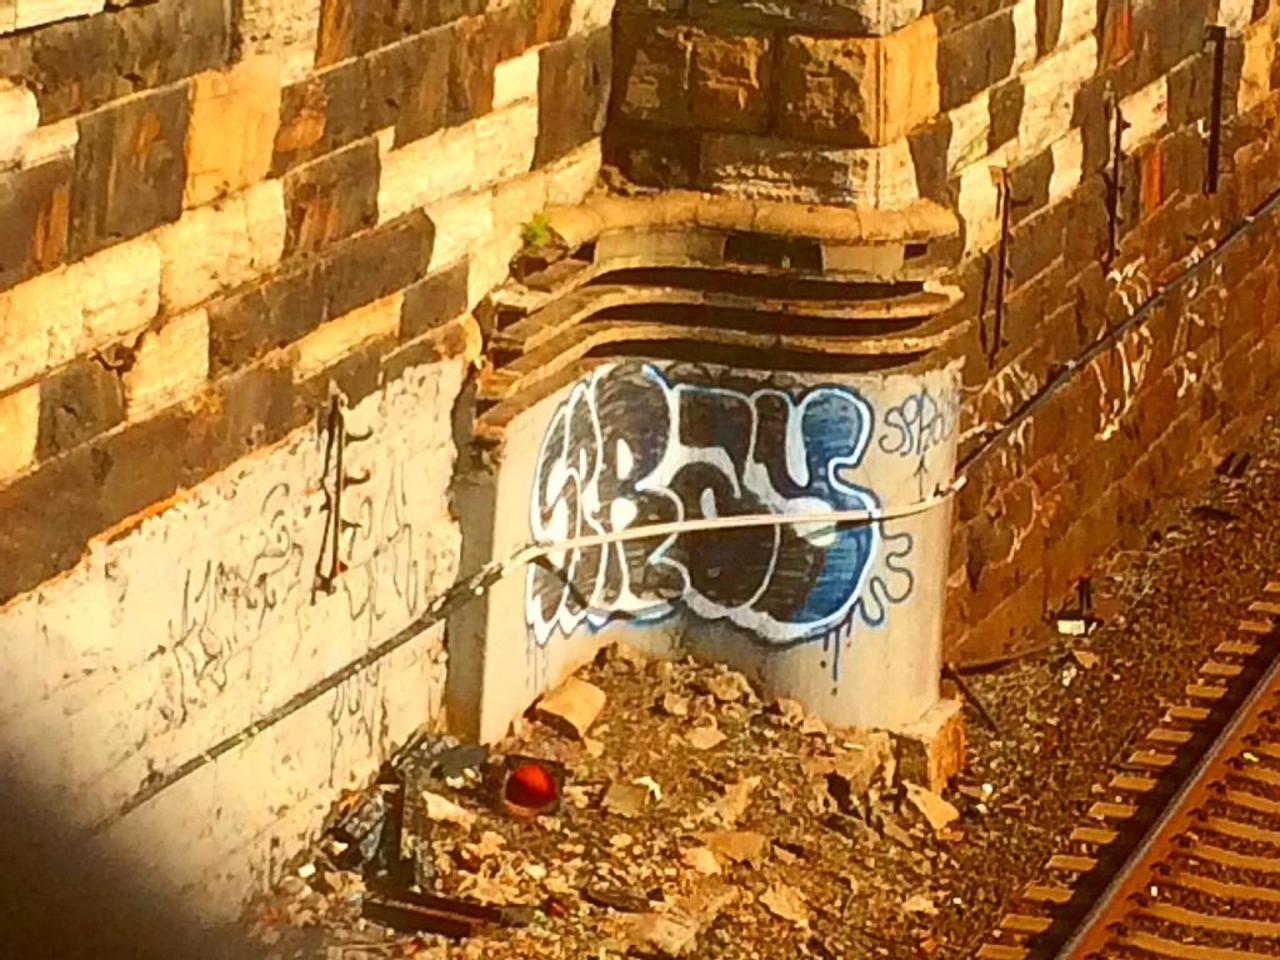 Spray in the Bronx hitting the rails #graffiti #Nikon #Bronx #StreetArt #spray #throwie http://t.co/4U86ohRTee